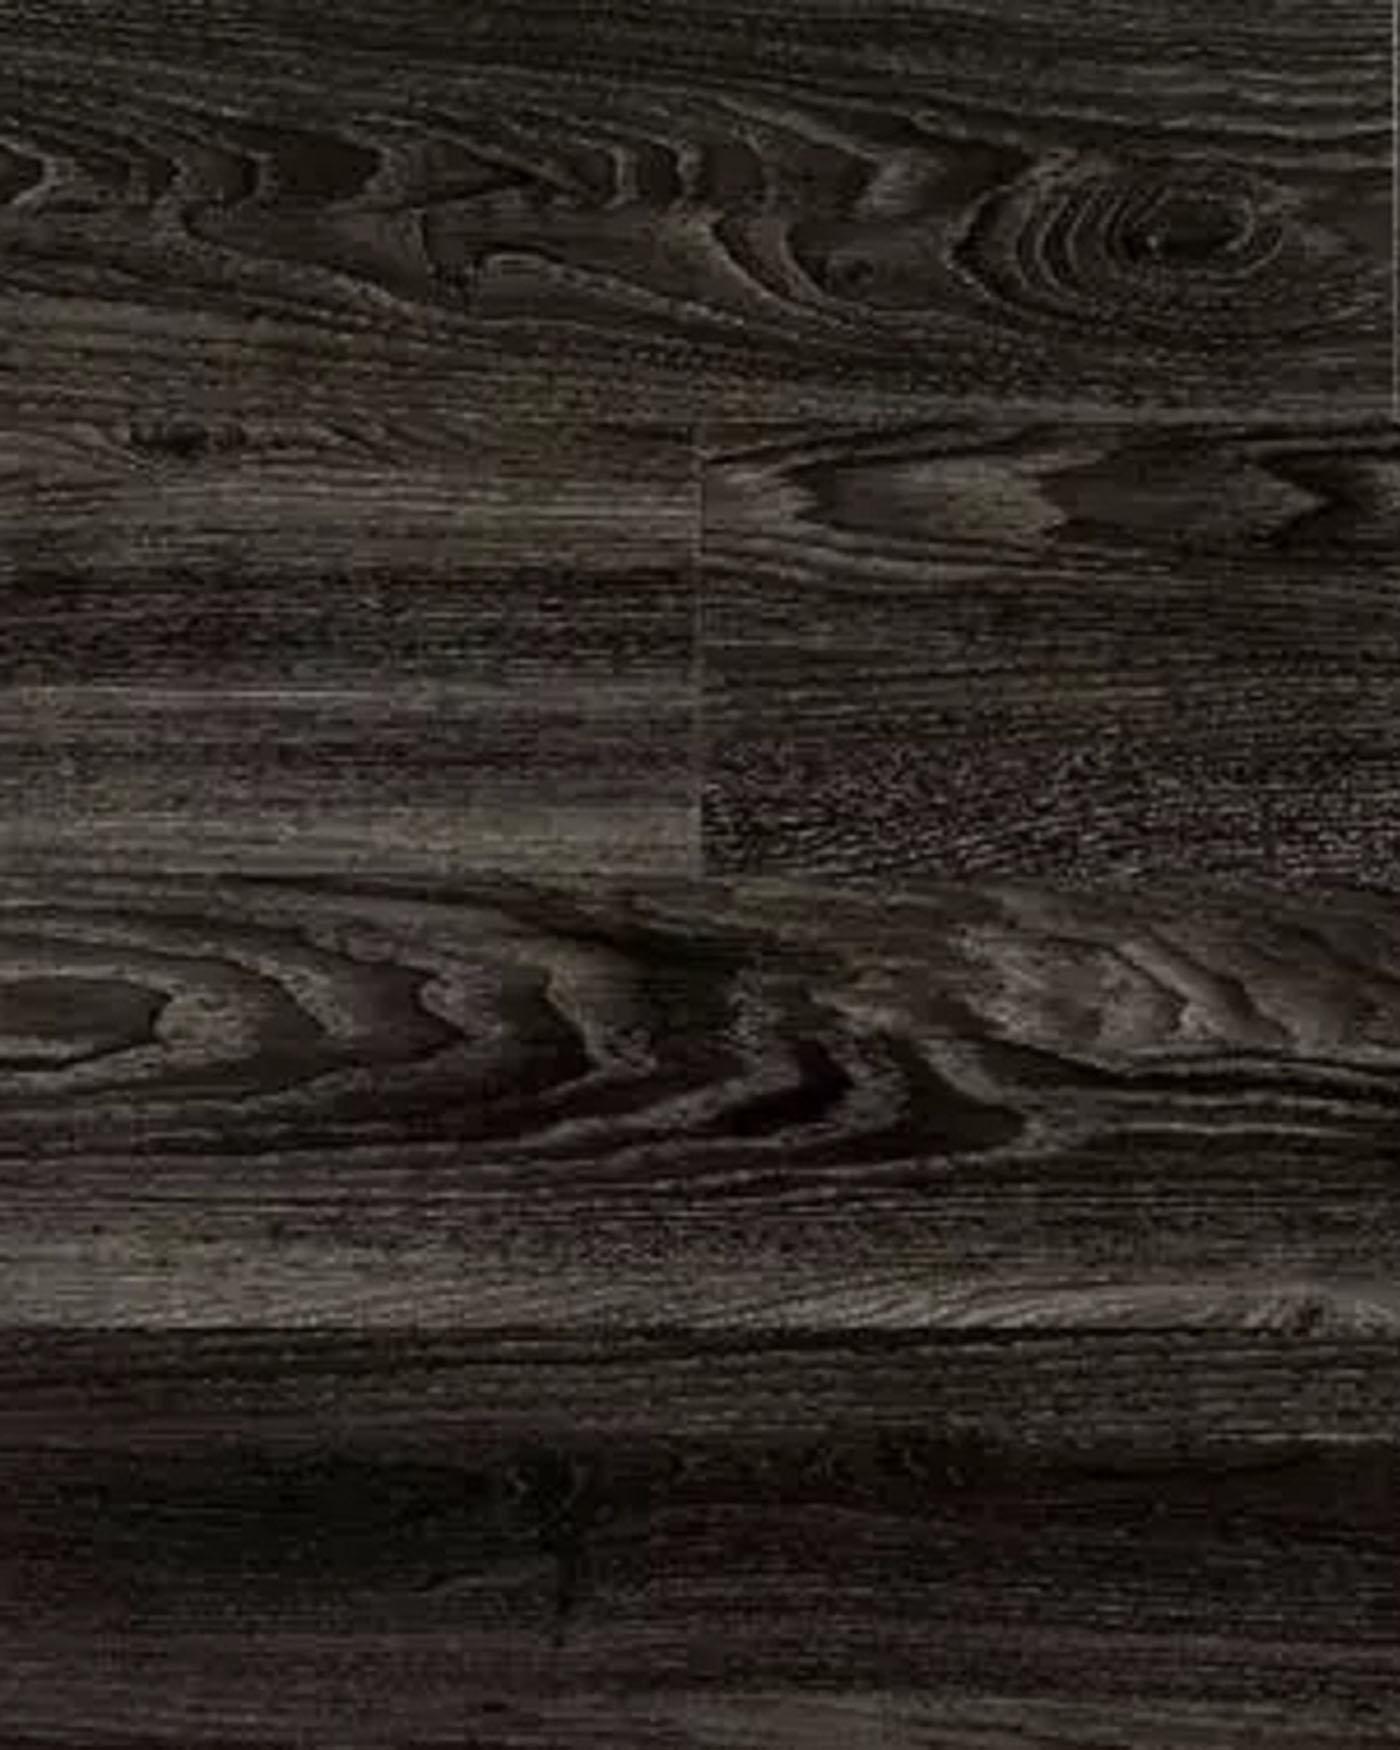 Black Ash Ambiance luxury vinyl flooring at kitchens InSynk ltd